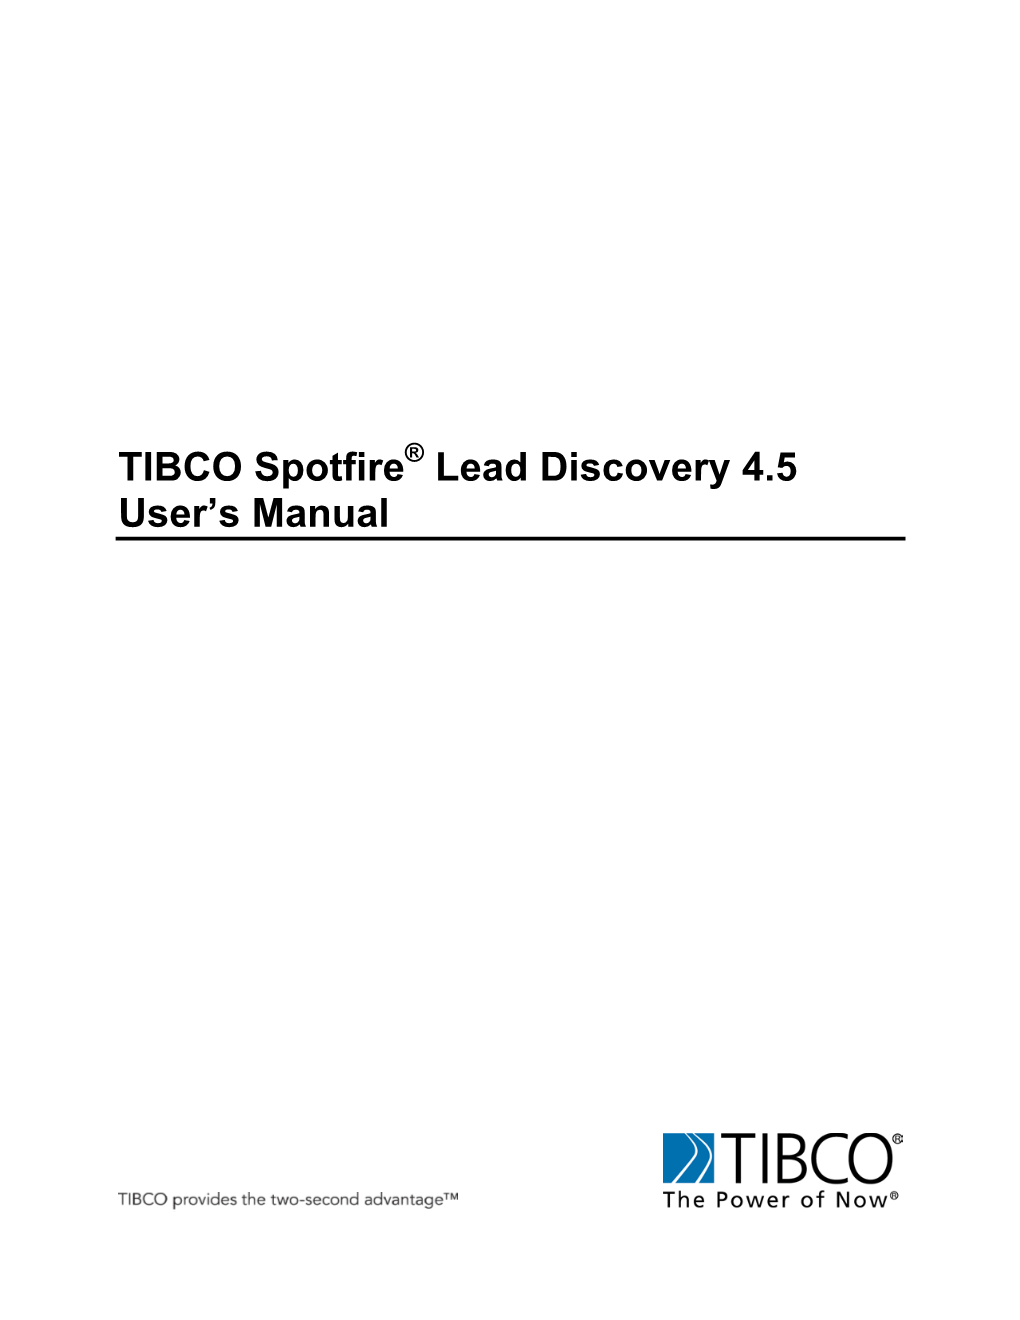 TIBCO Spotfire Lead Discovery 4.5 User's Manual